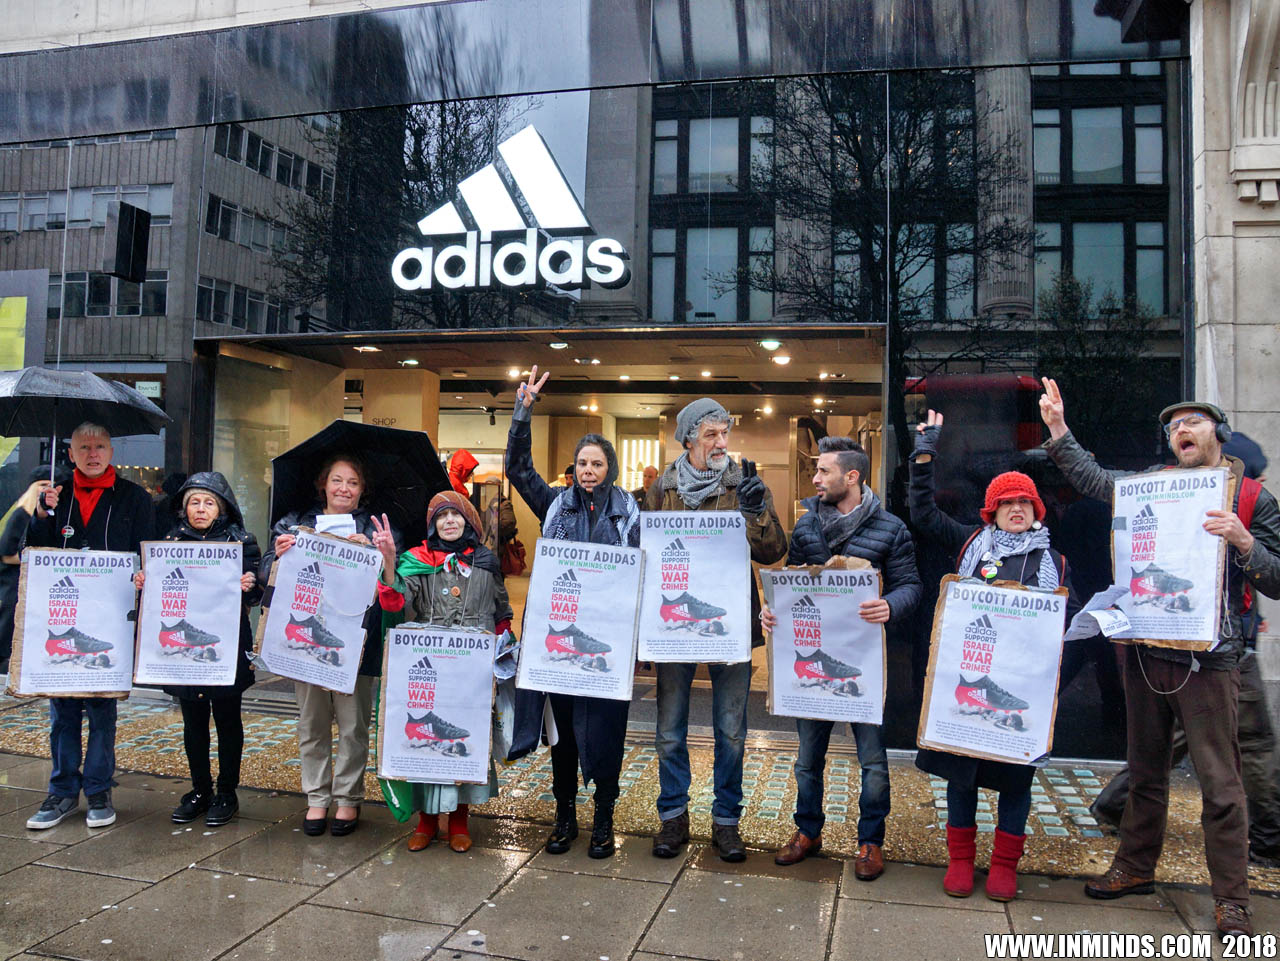 Boycott Israel News: London Protest Adidas End Apartheid Sponsorship, Stop War Crimes